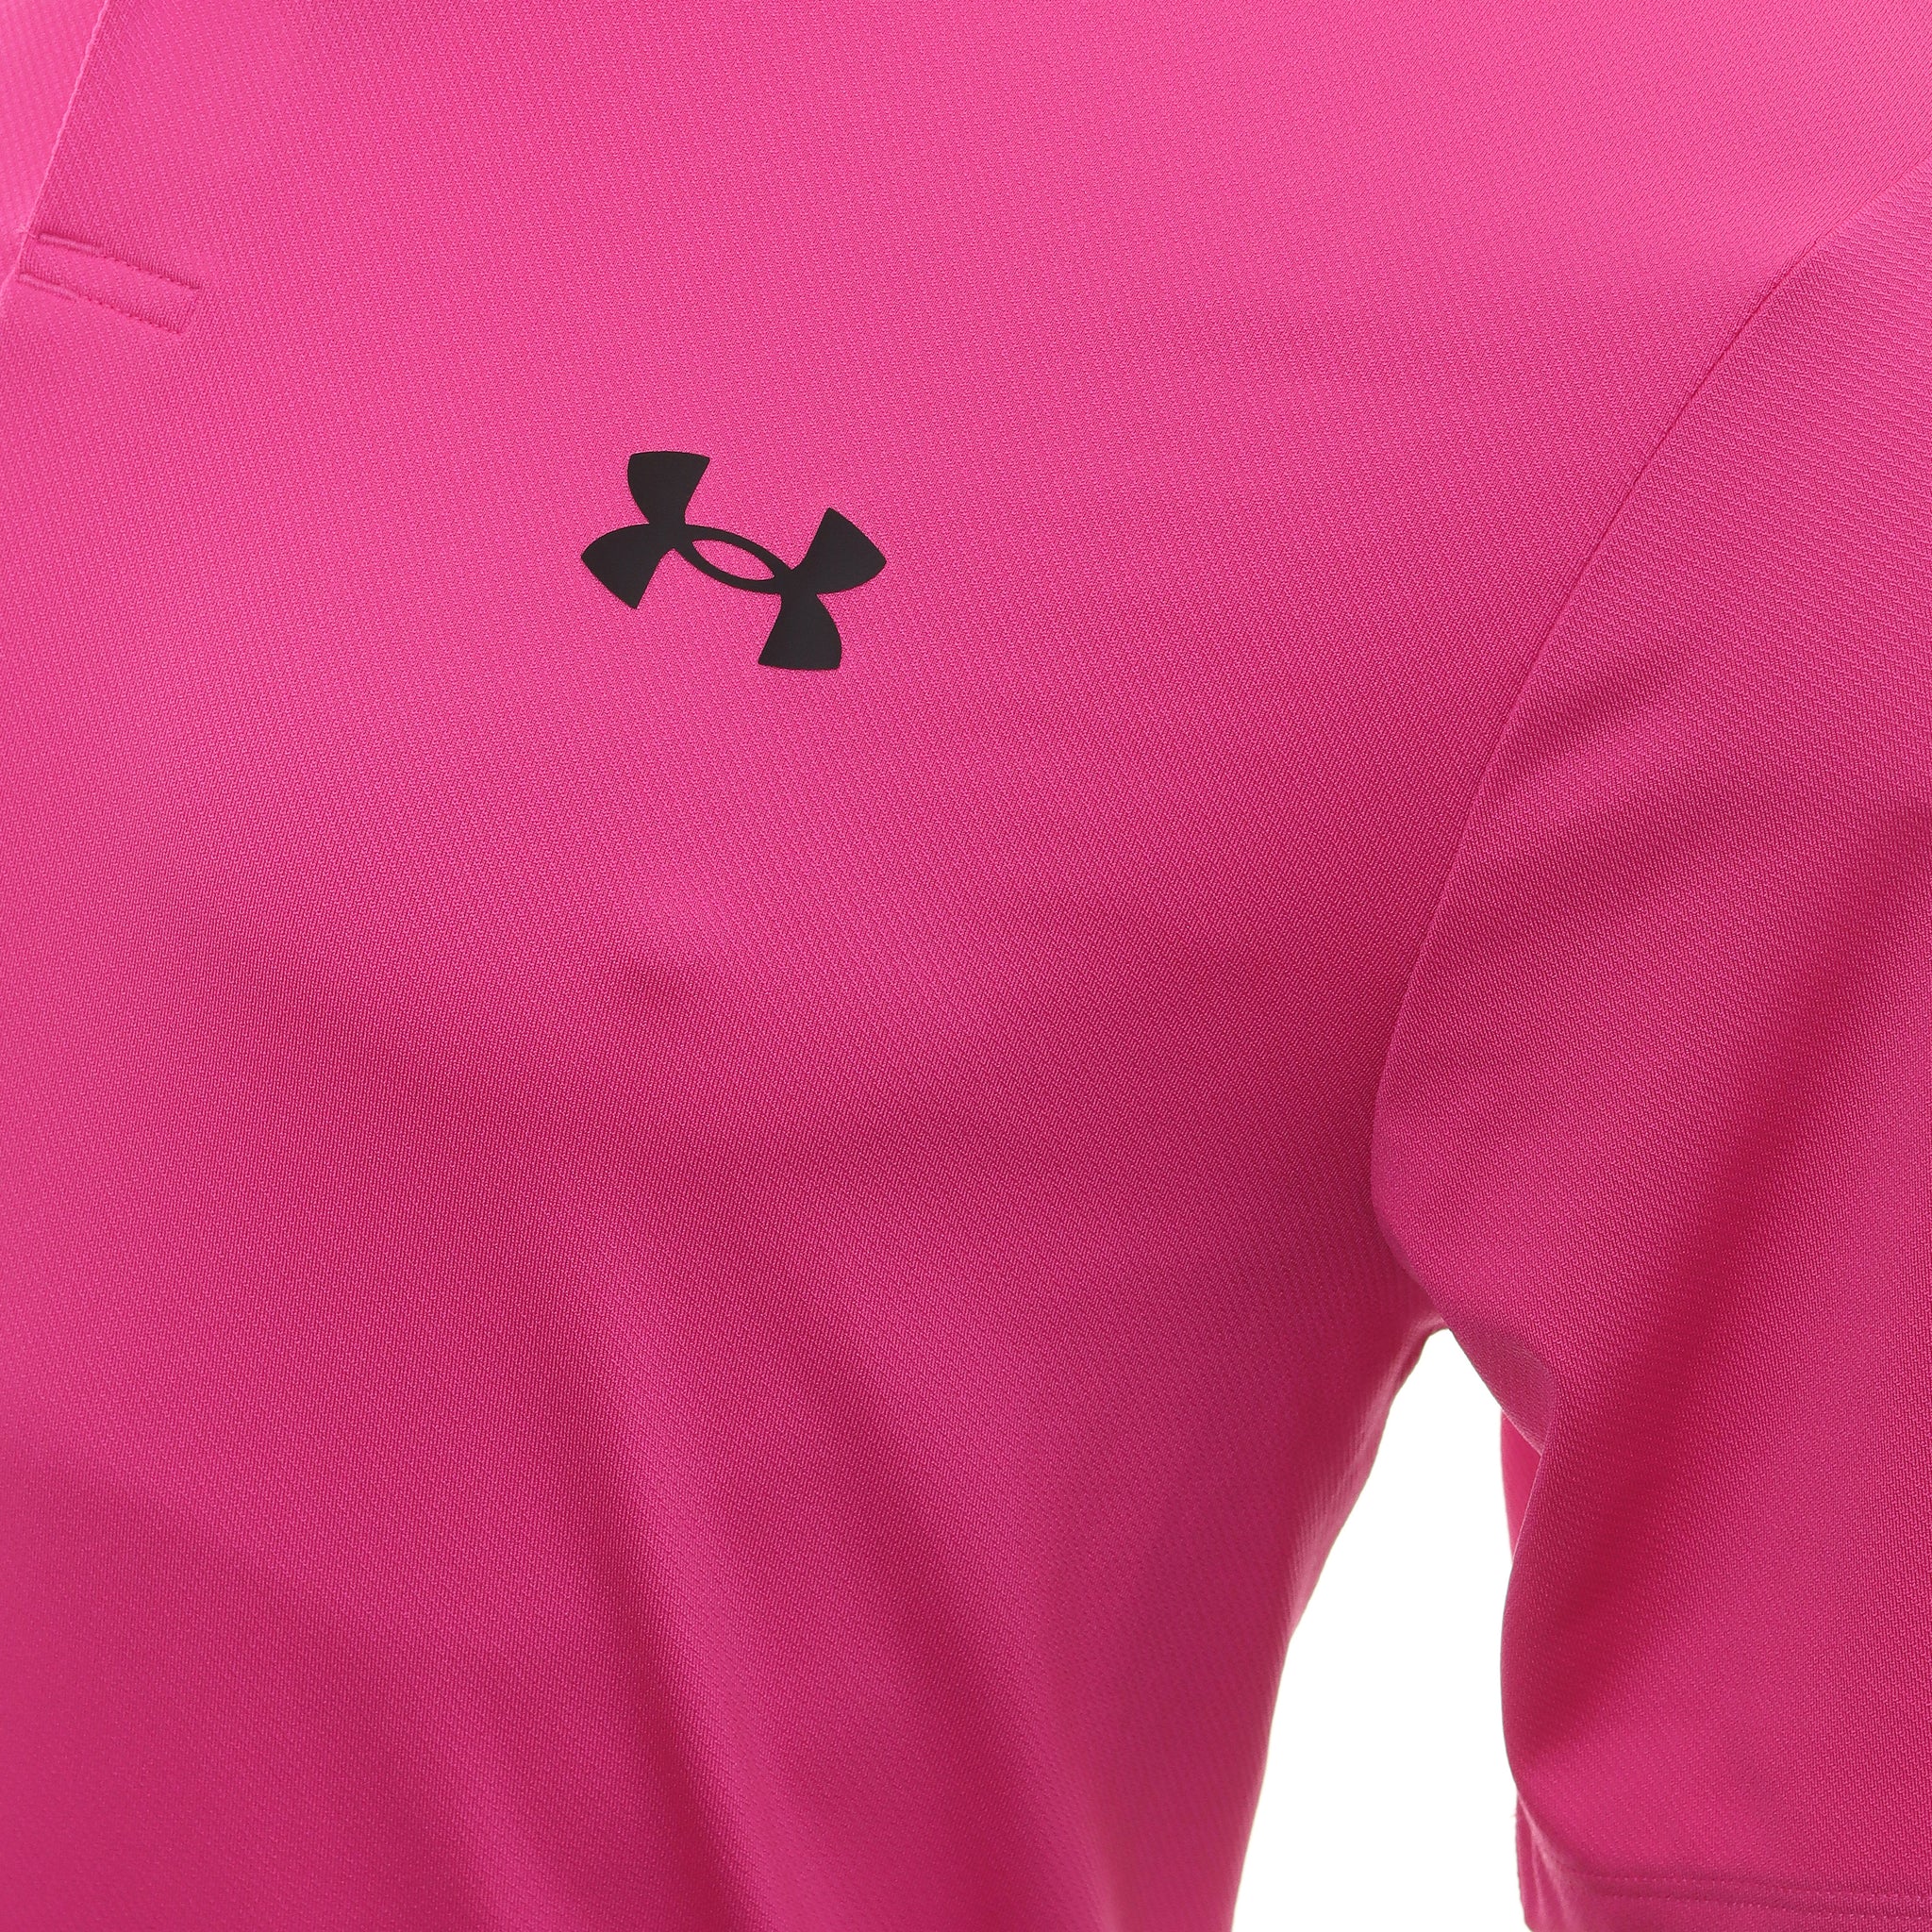 under-armour-golf-performance-3-0-shirt-1377374-rebel-pink-652